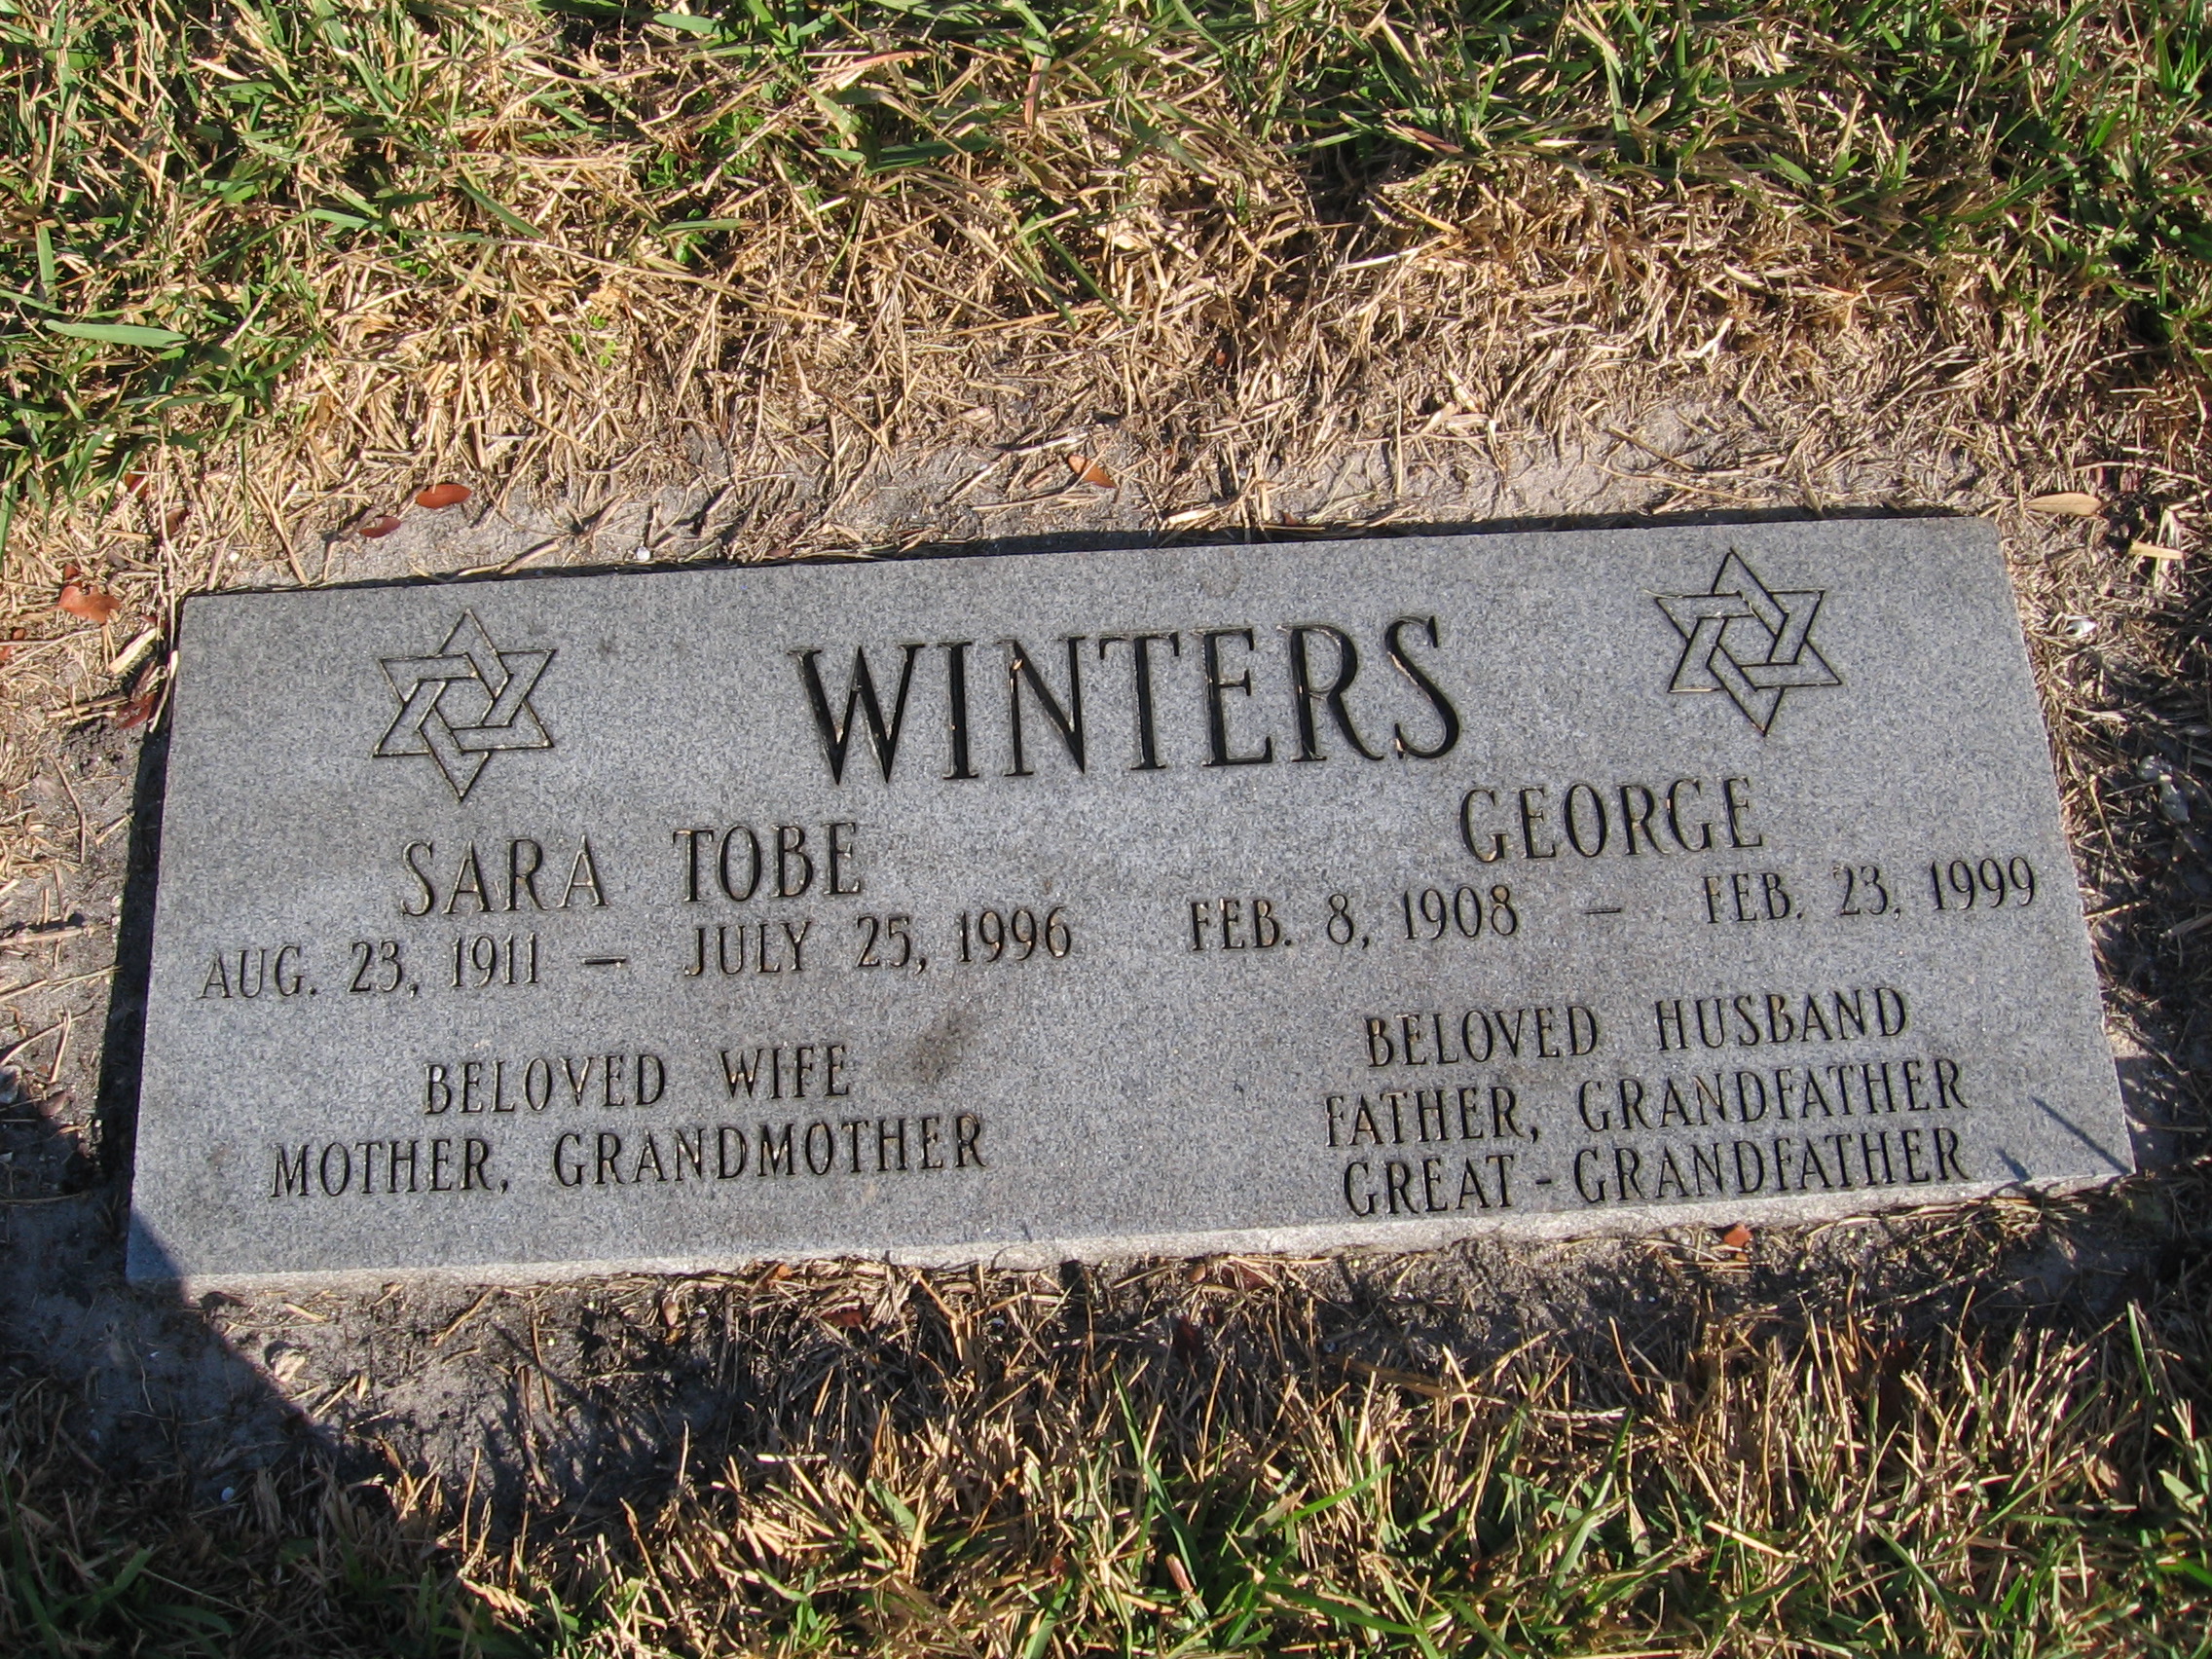 Sara Tobe Winters